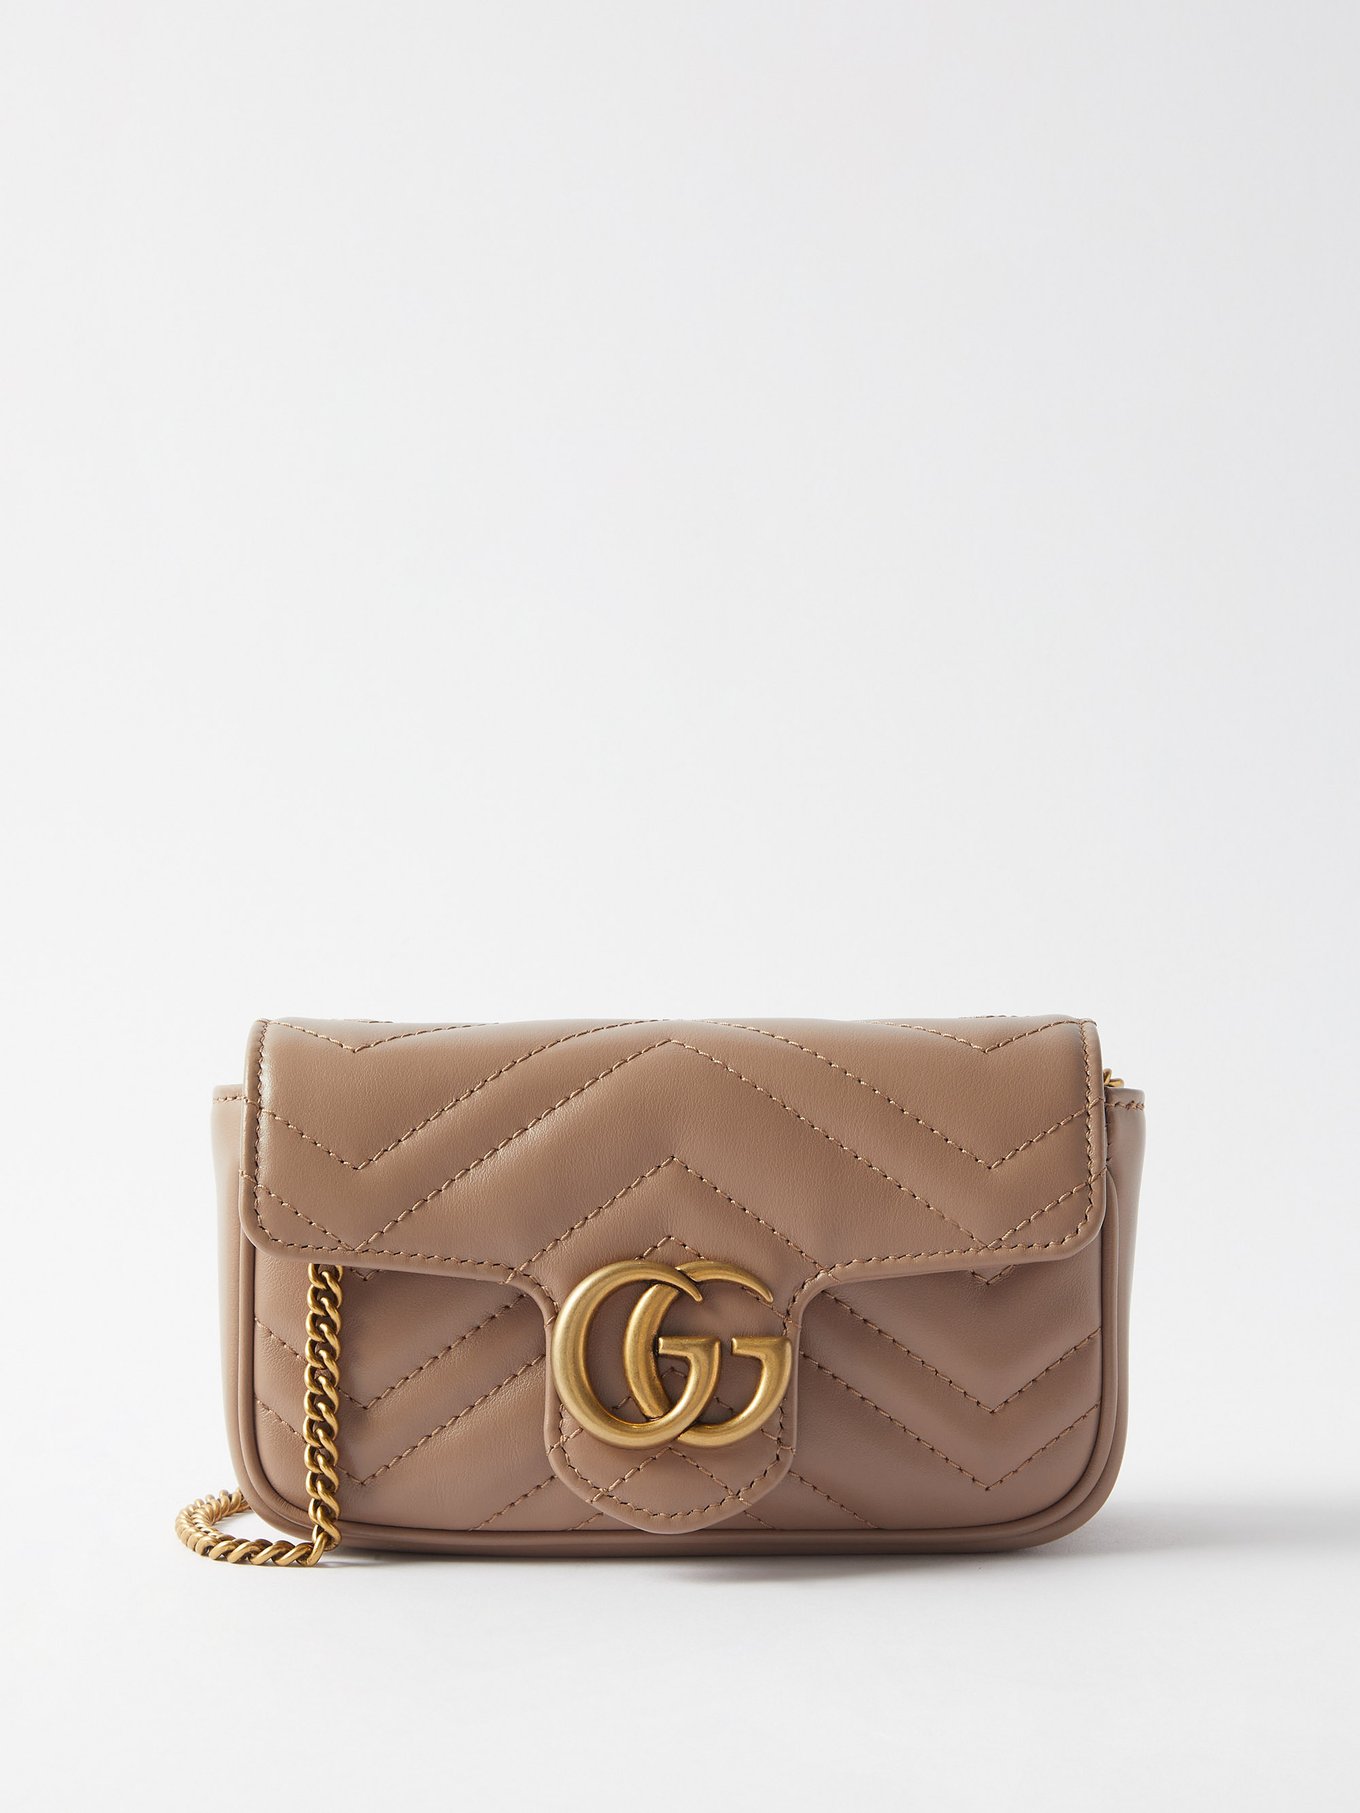 GG Marmont mini matelassé leather cross body bag   Gucci